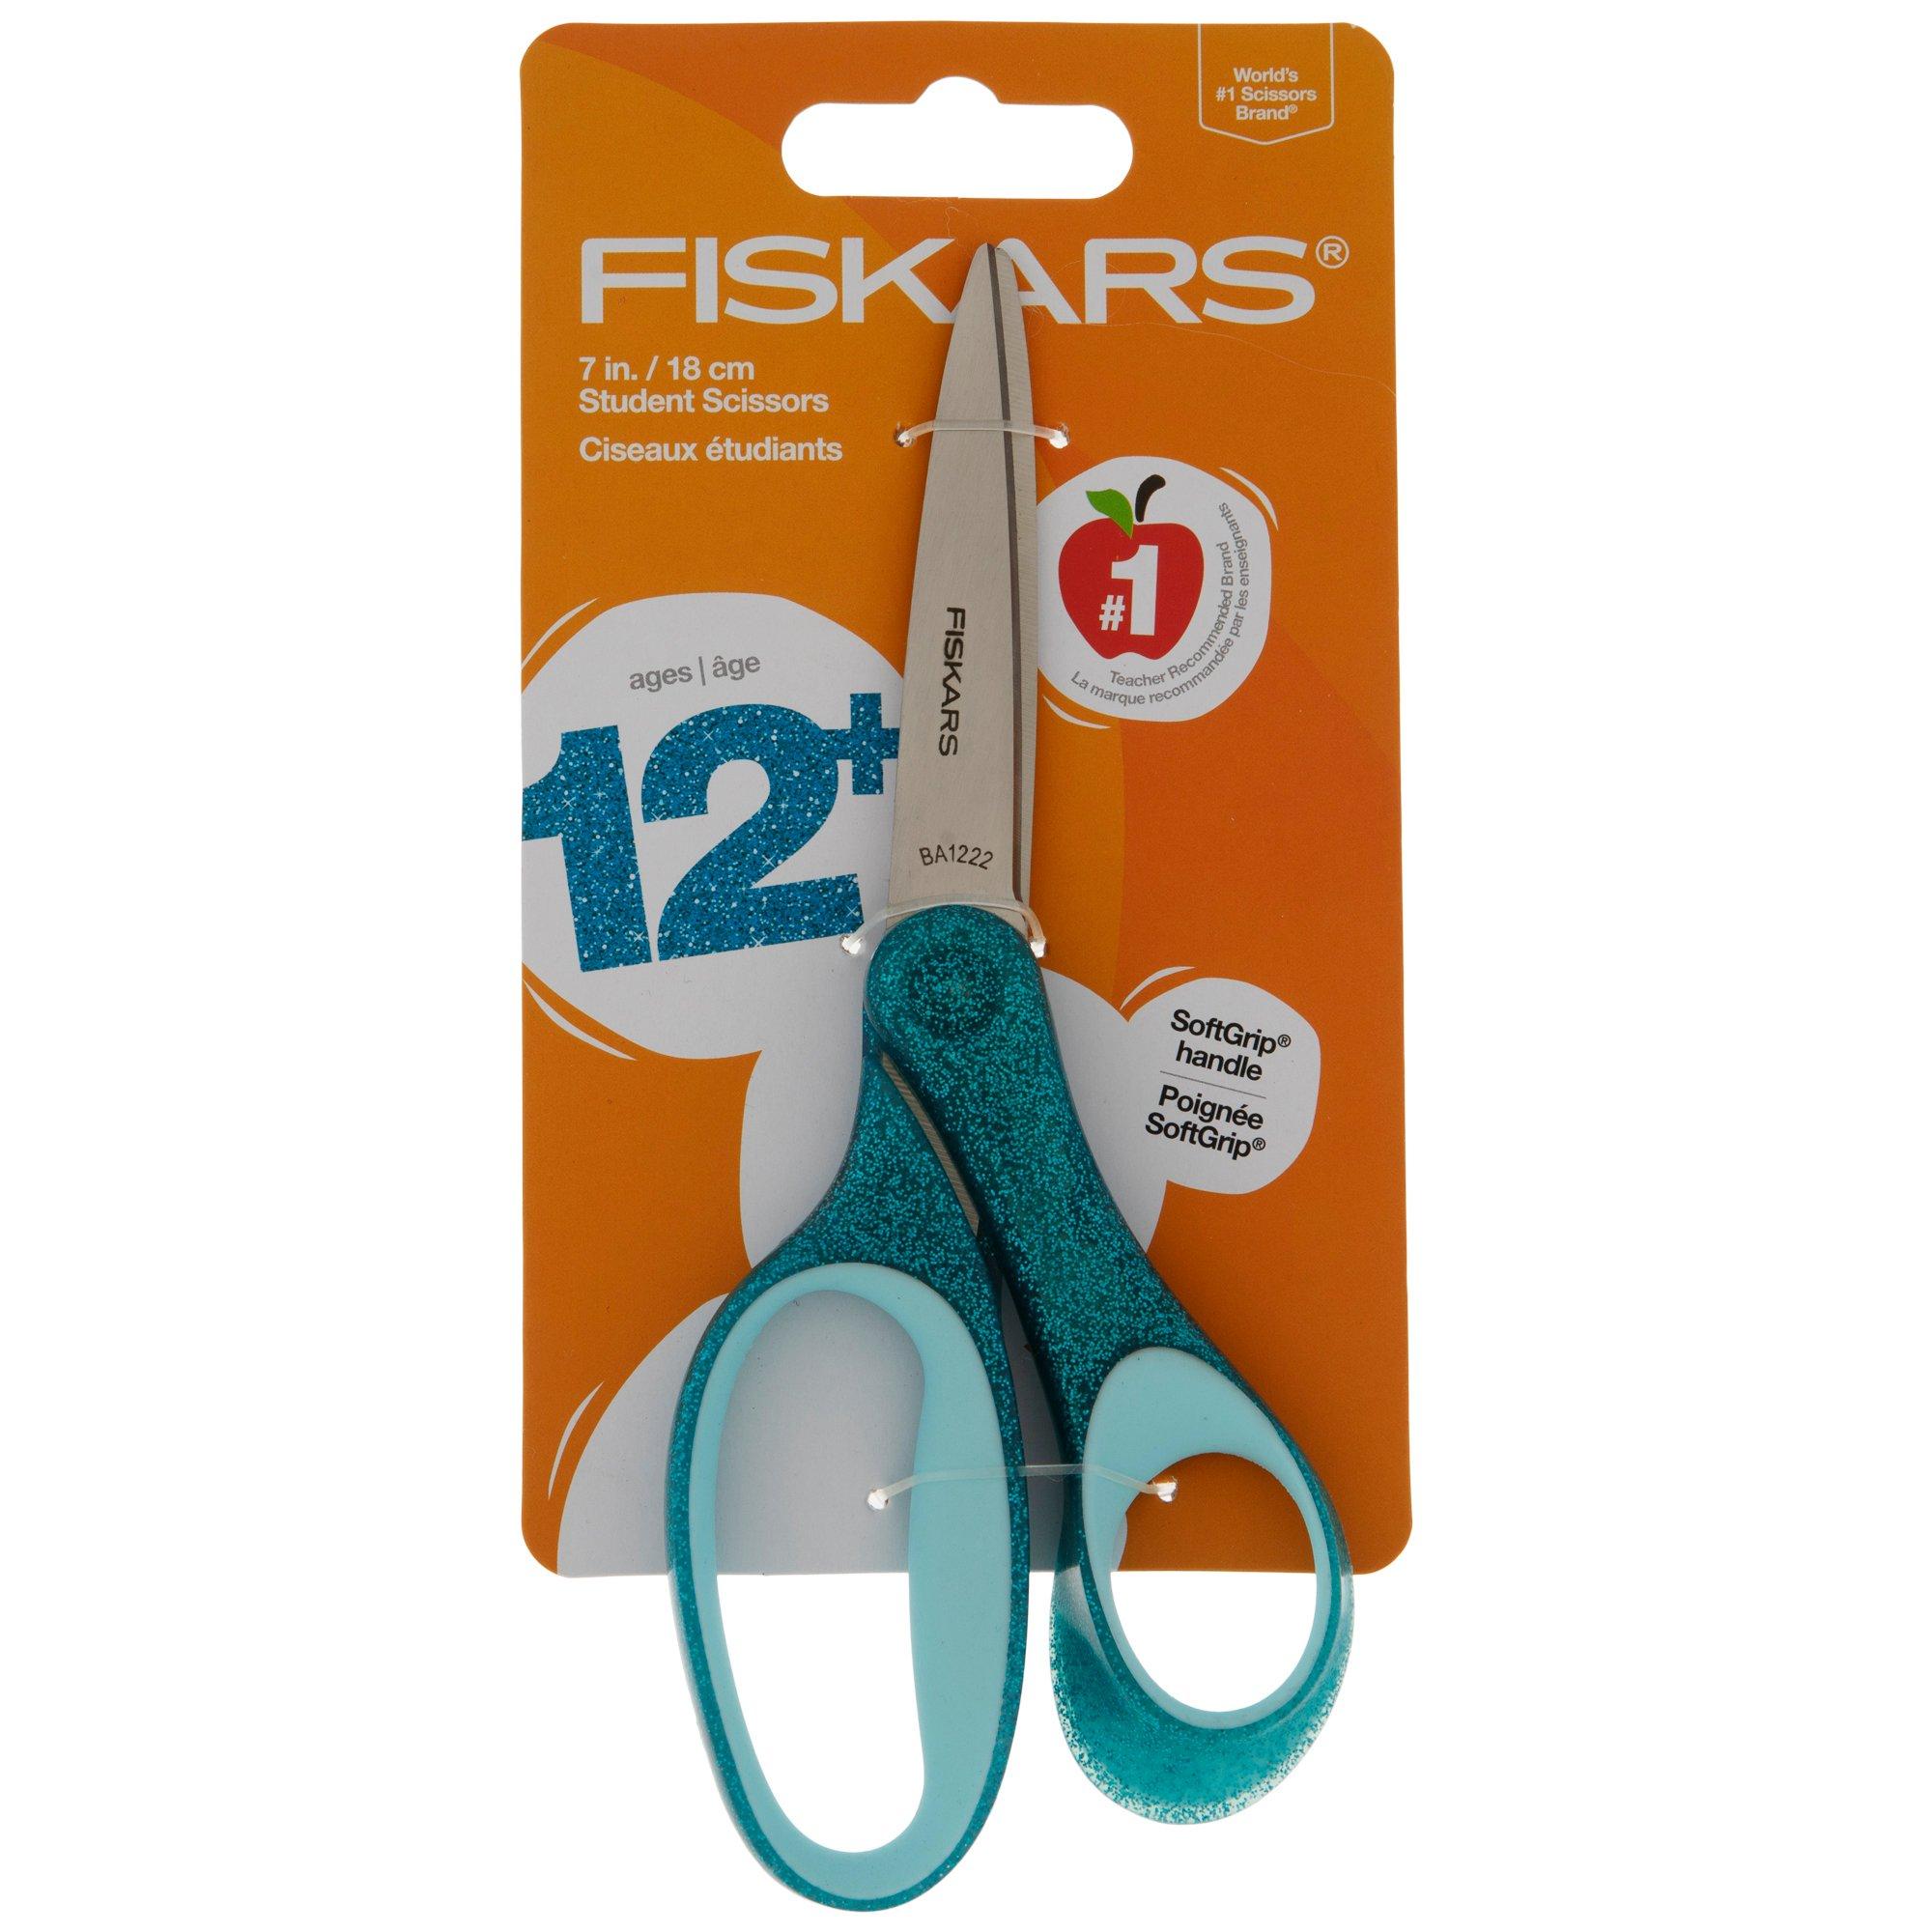 Glittery Scissors Upgrade Plus Teacher Gift Printable - Persia Lou